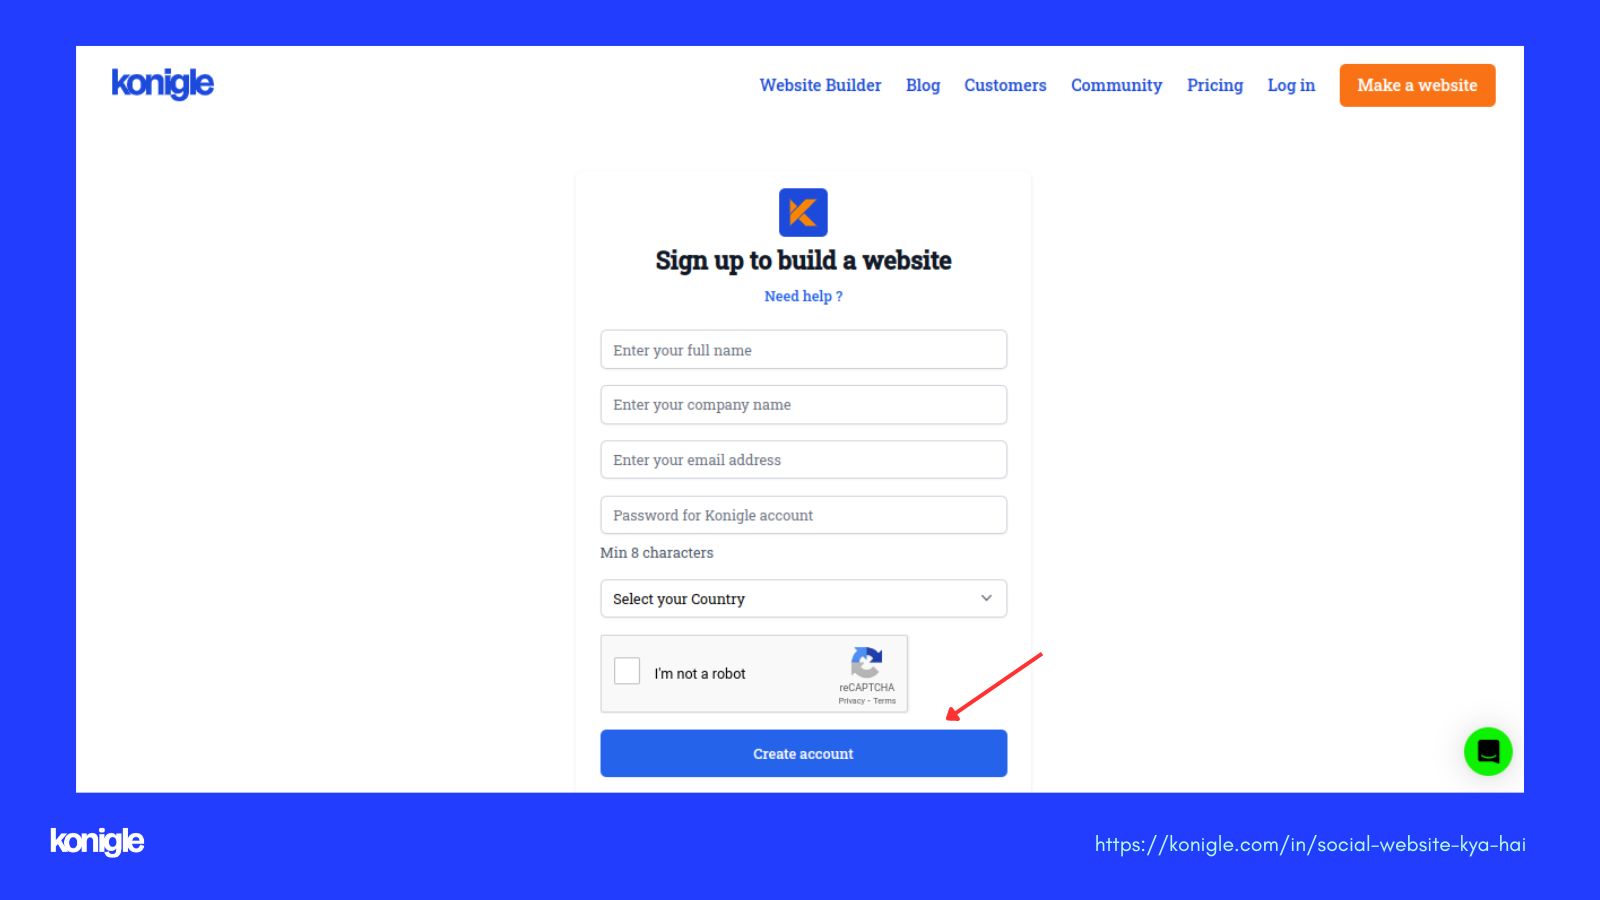 Create an account option on the konigle website